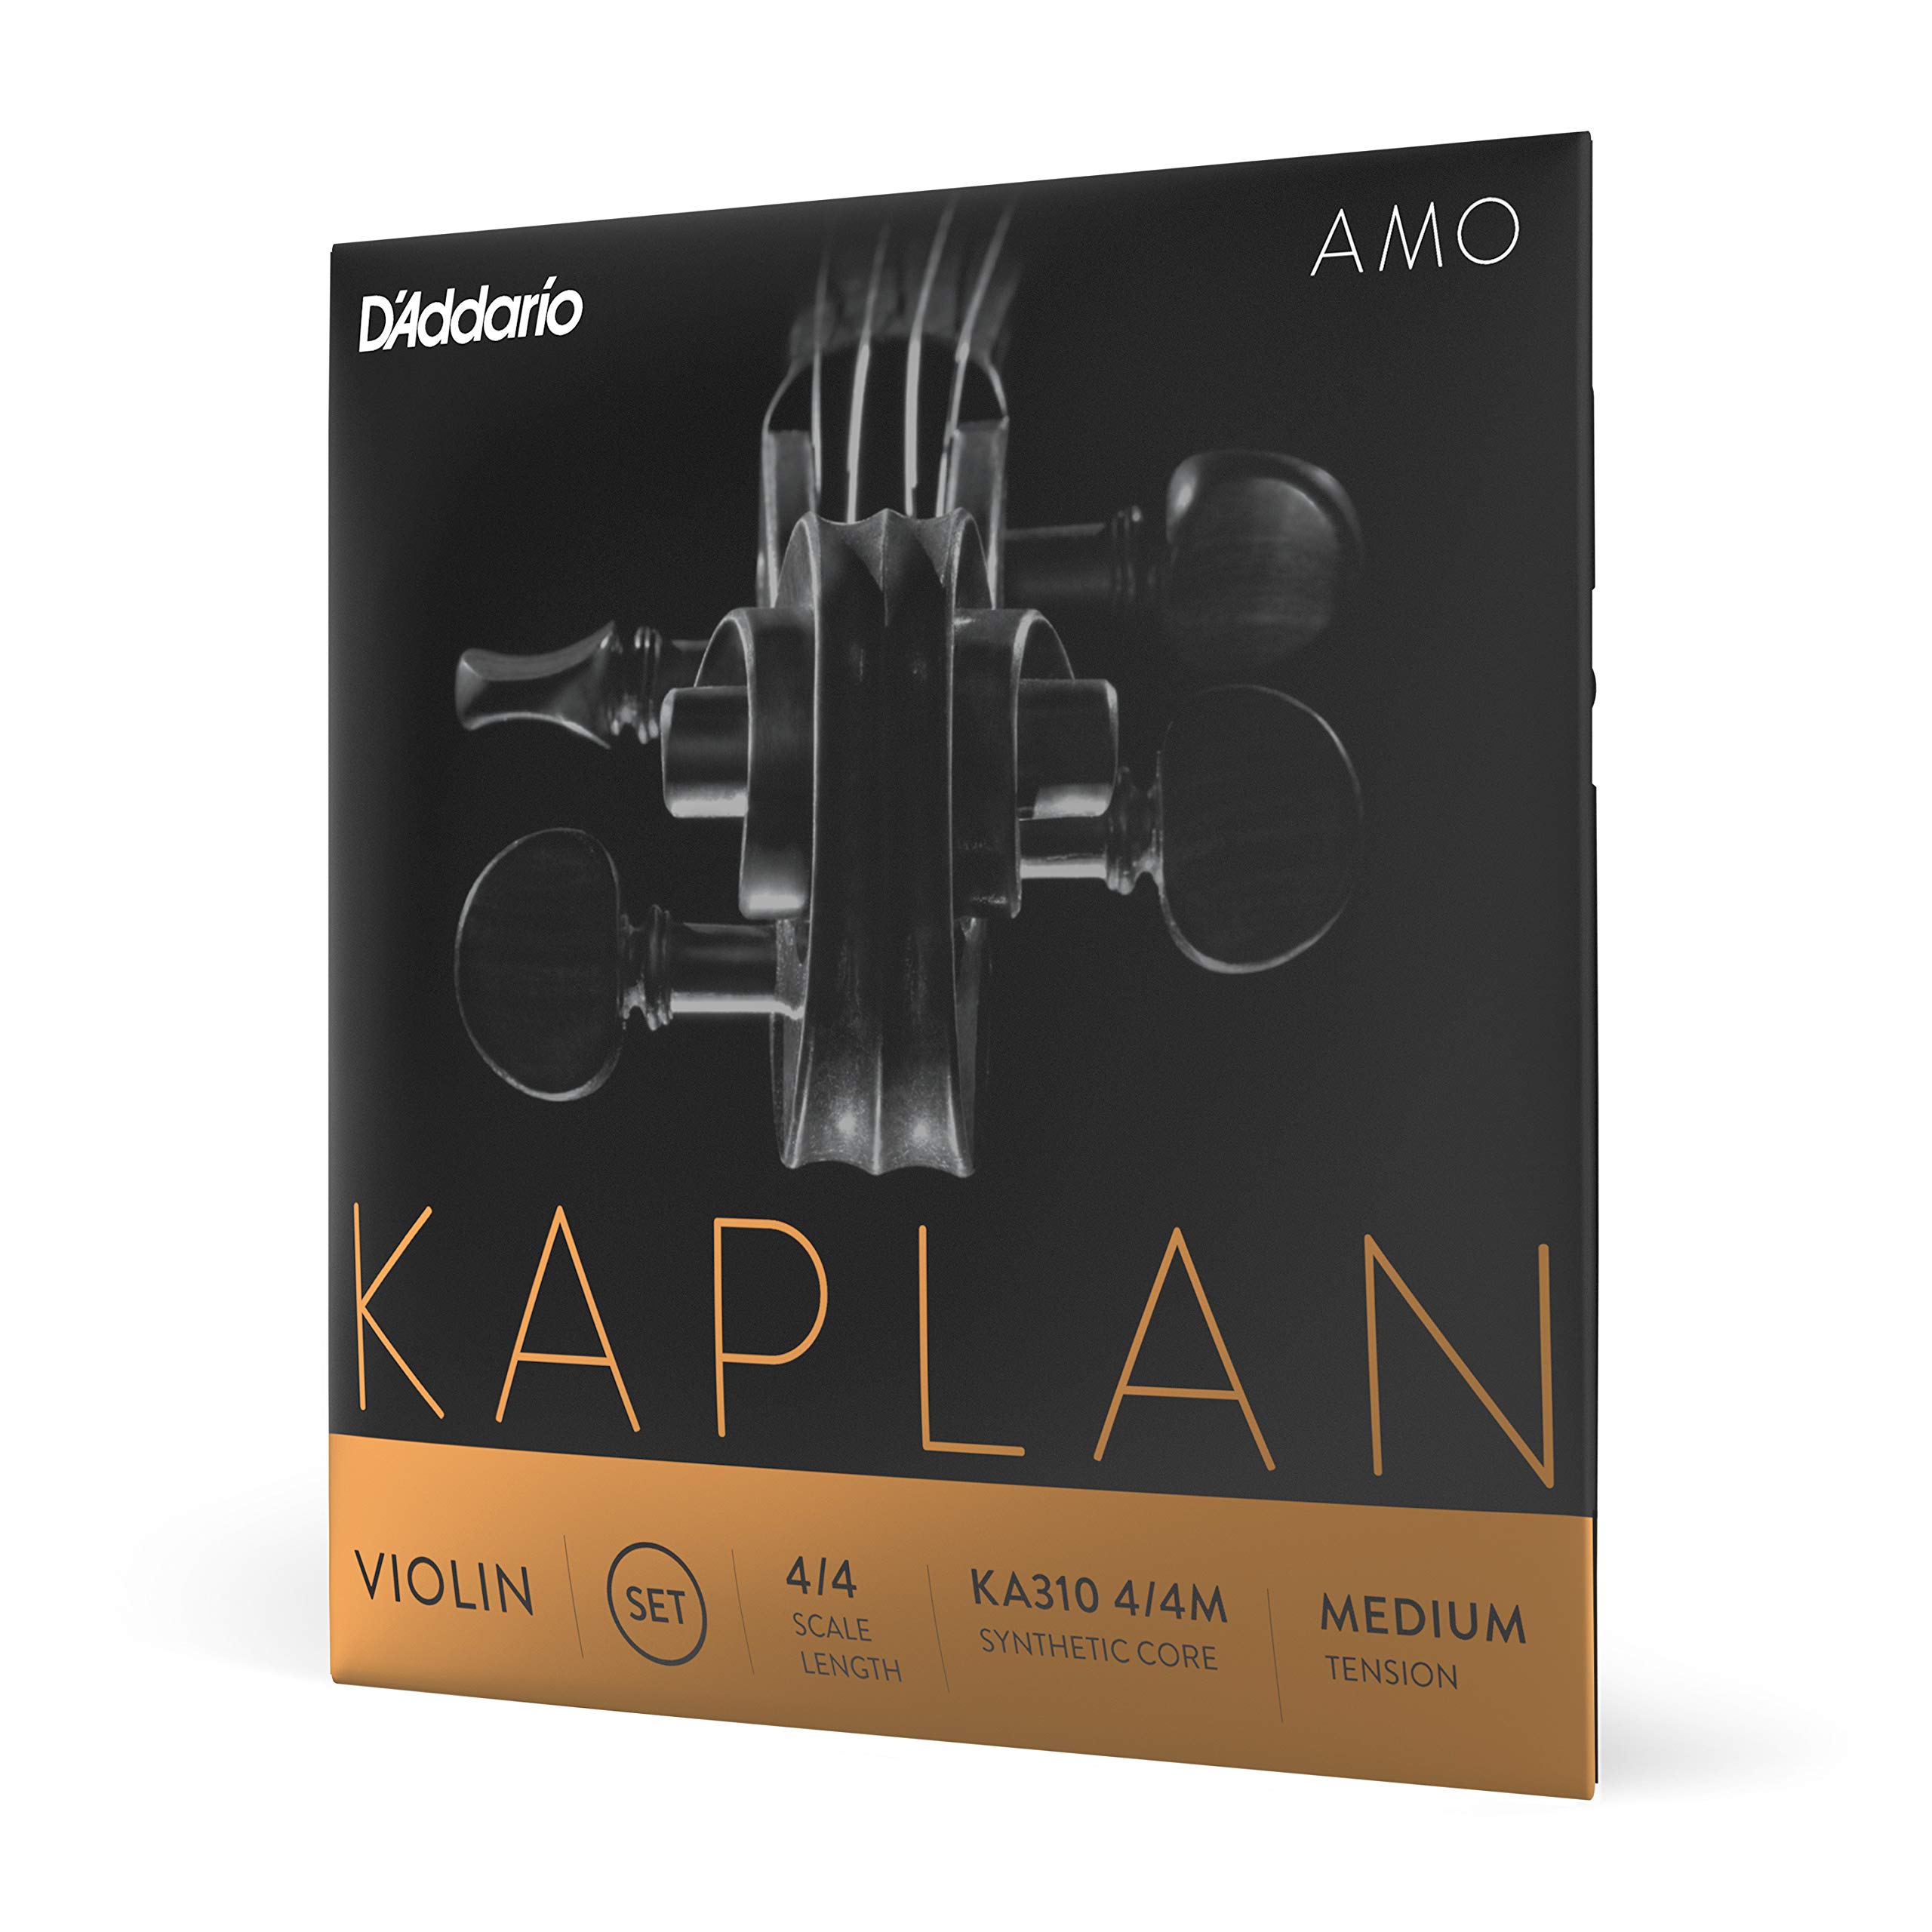 D'Addario Kaplan Amo Violinsaiten - Vollständiger Satz - KA310 4/4M - Violinsaiten - 4/4 Skala, Mittlere Spannung